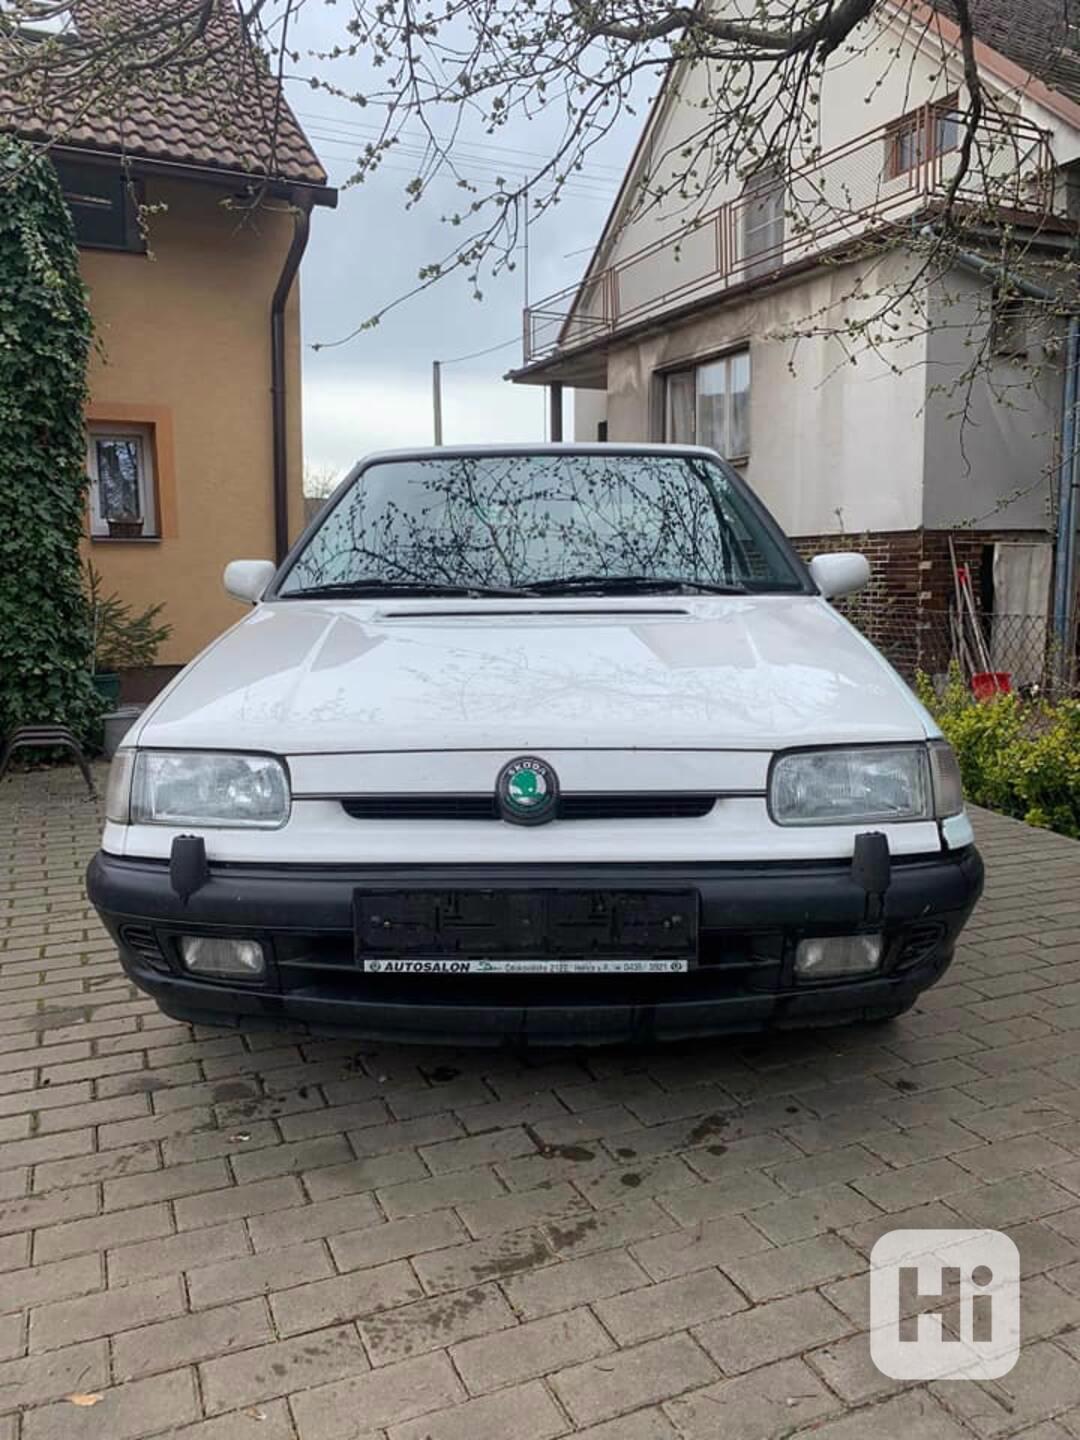 Škoda Felicia GLXI 1.3 MPI 1997 Rv. 1997 1.3mpi  50kw  - foto 1